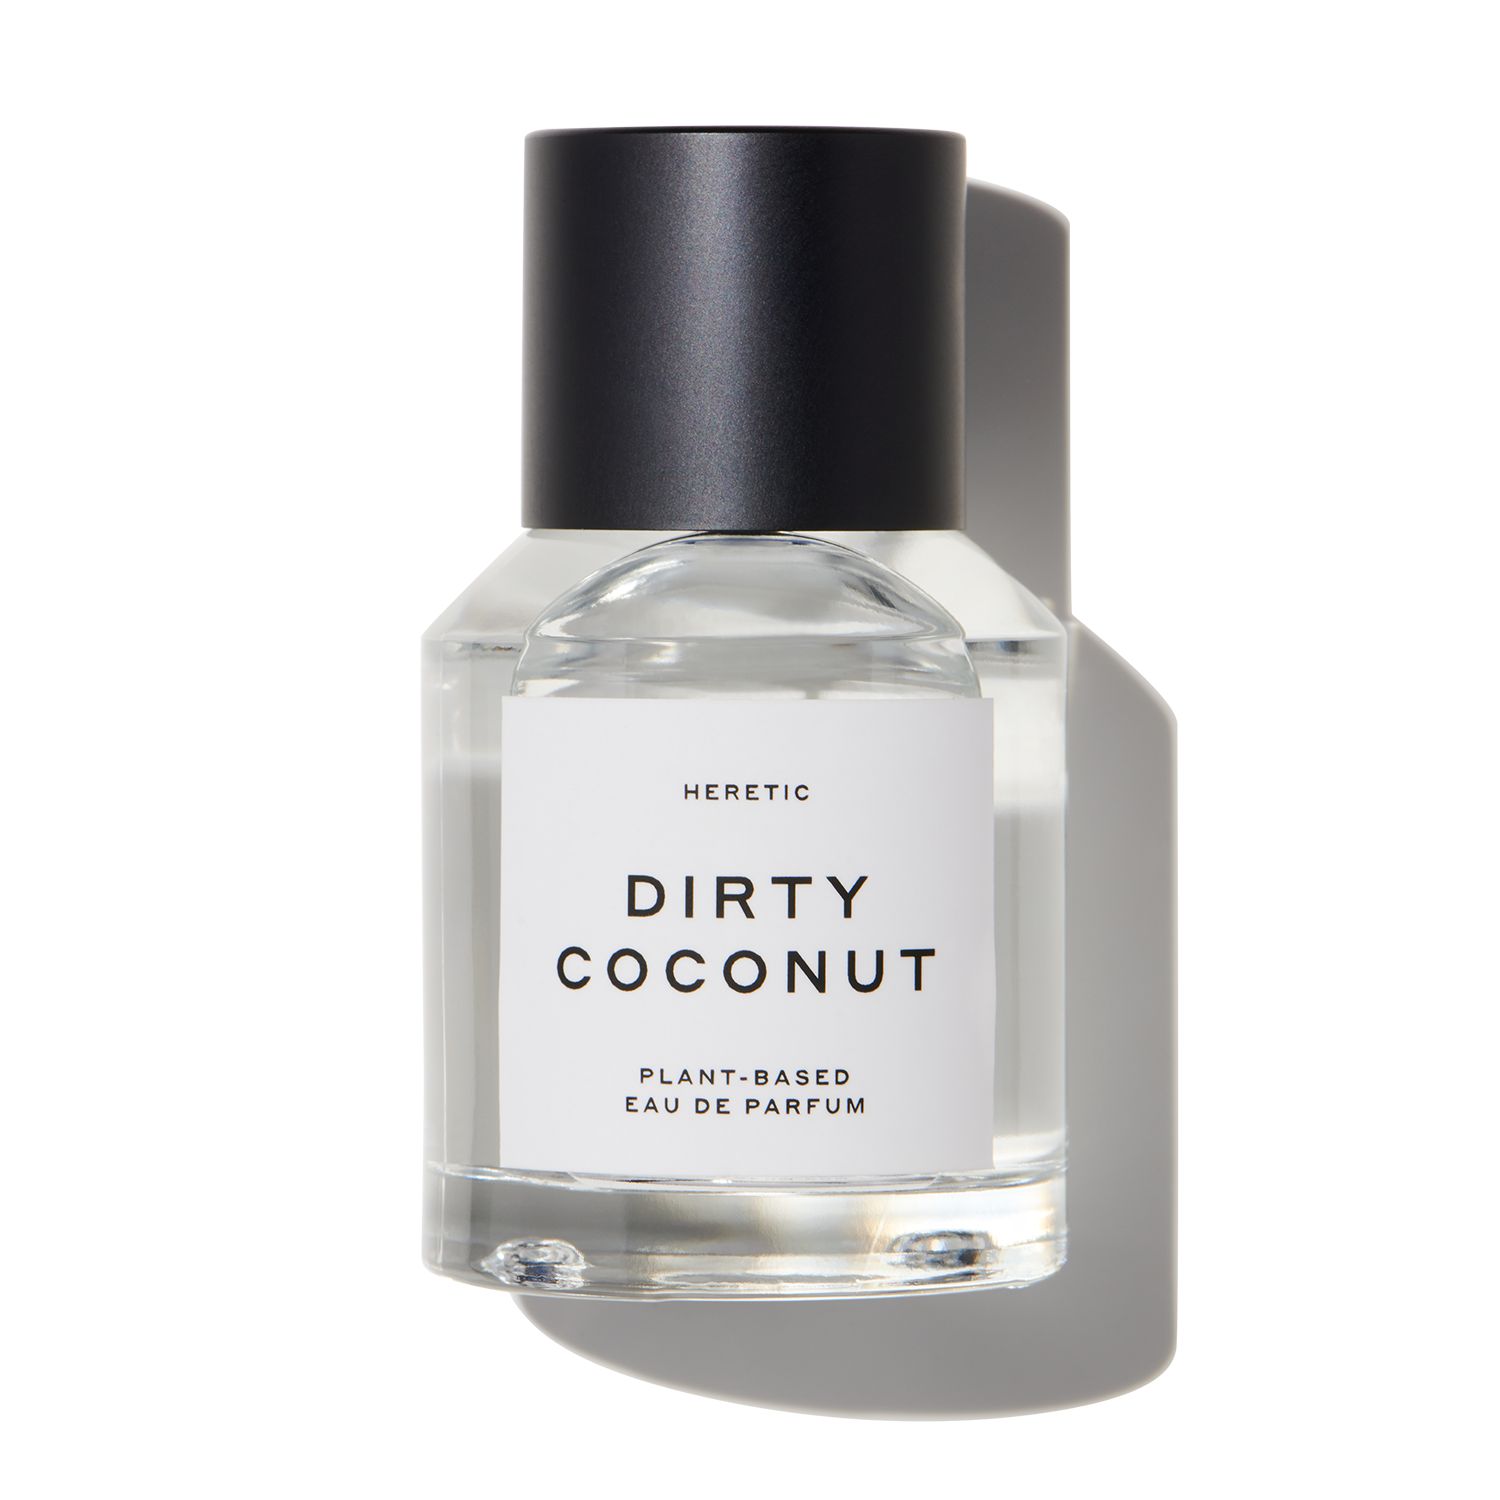 Get Heretic PARFUM Dirty Coconut perfume at Scentbird